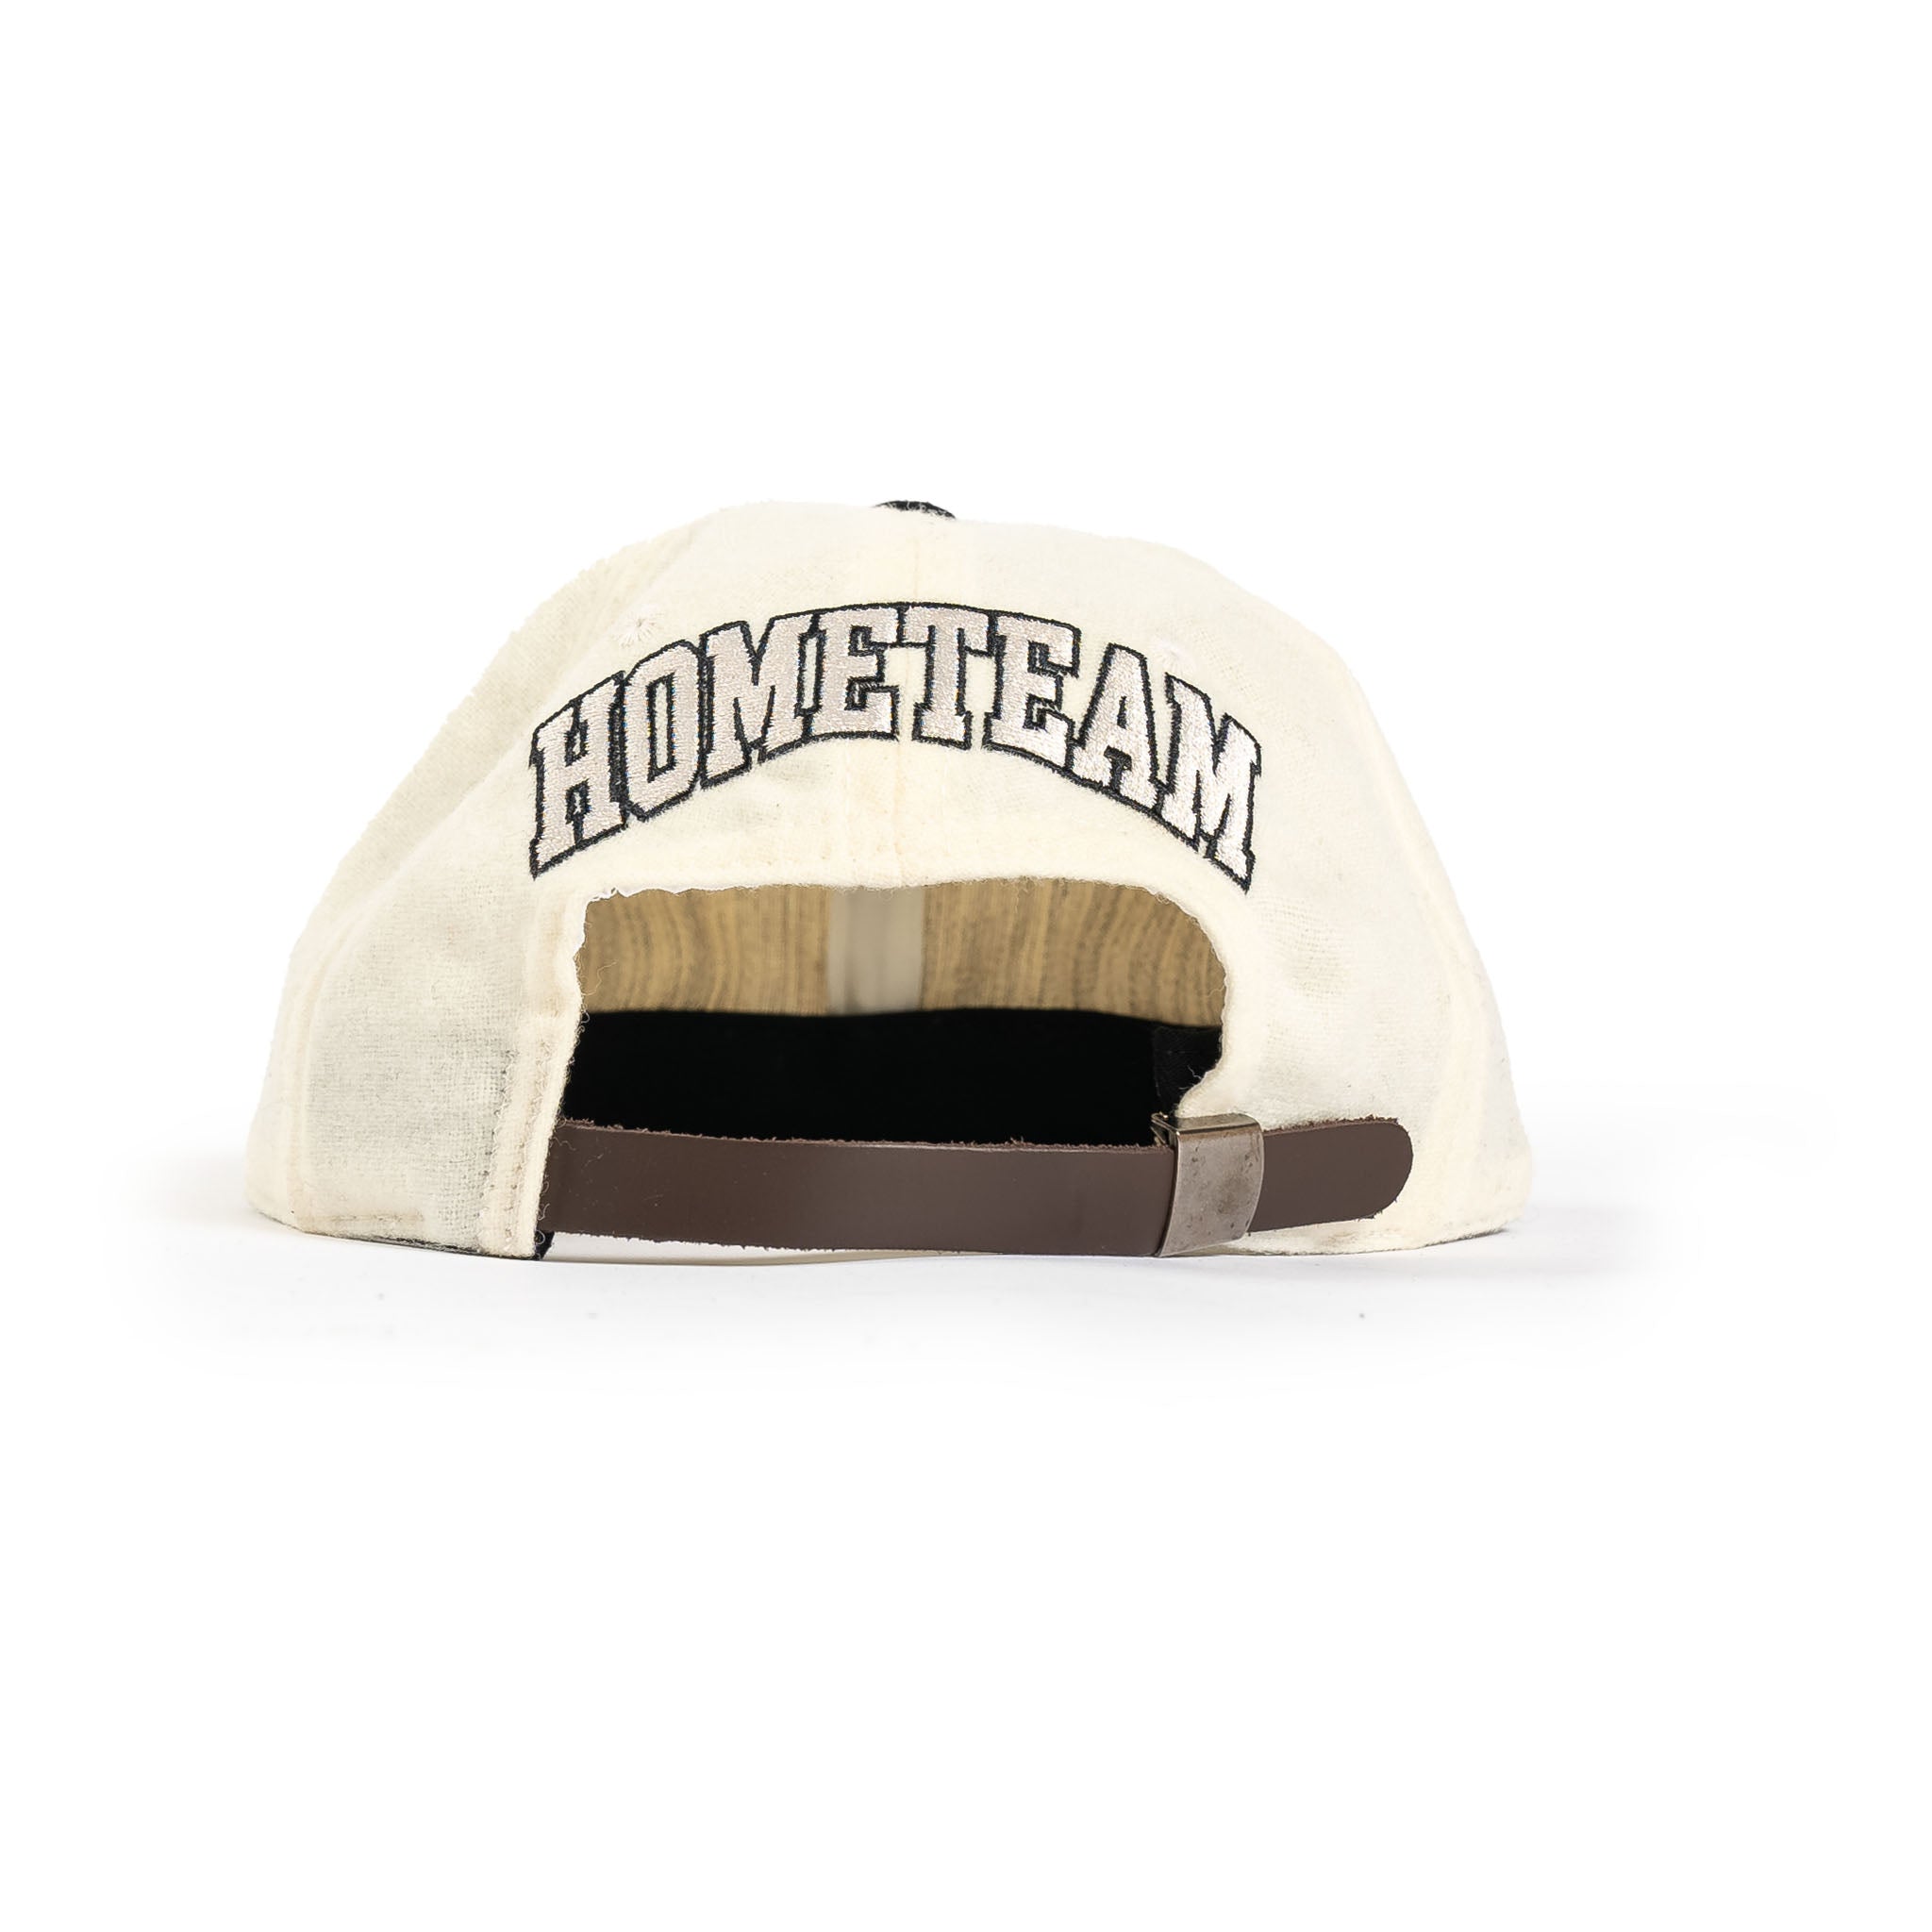 HOMETEAM Back Cap by Ebbets Field